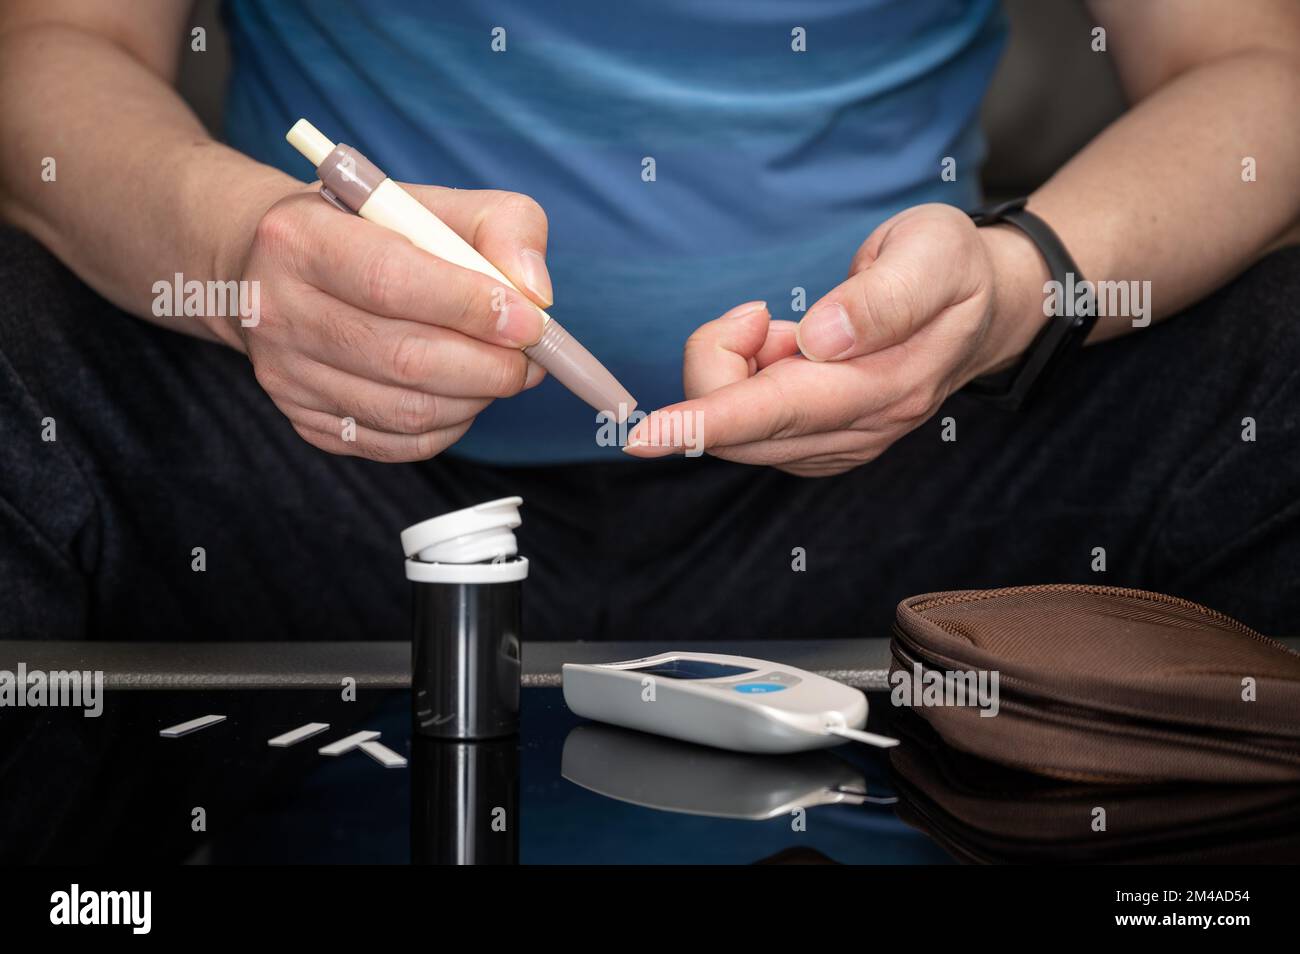 Man measures his blood sugar. Glaucometer, blood sample test, diabetes concept. Stock Photo